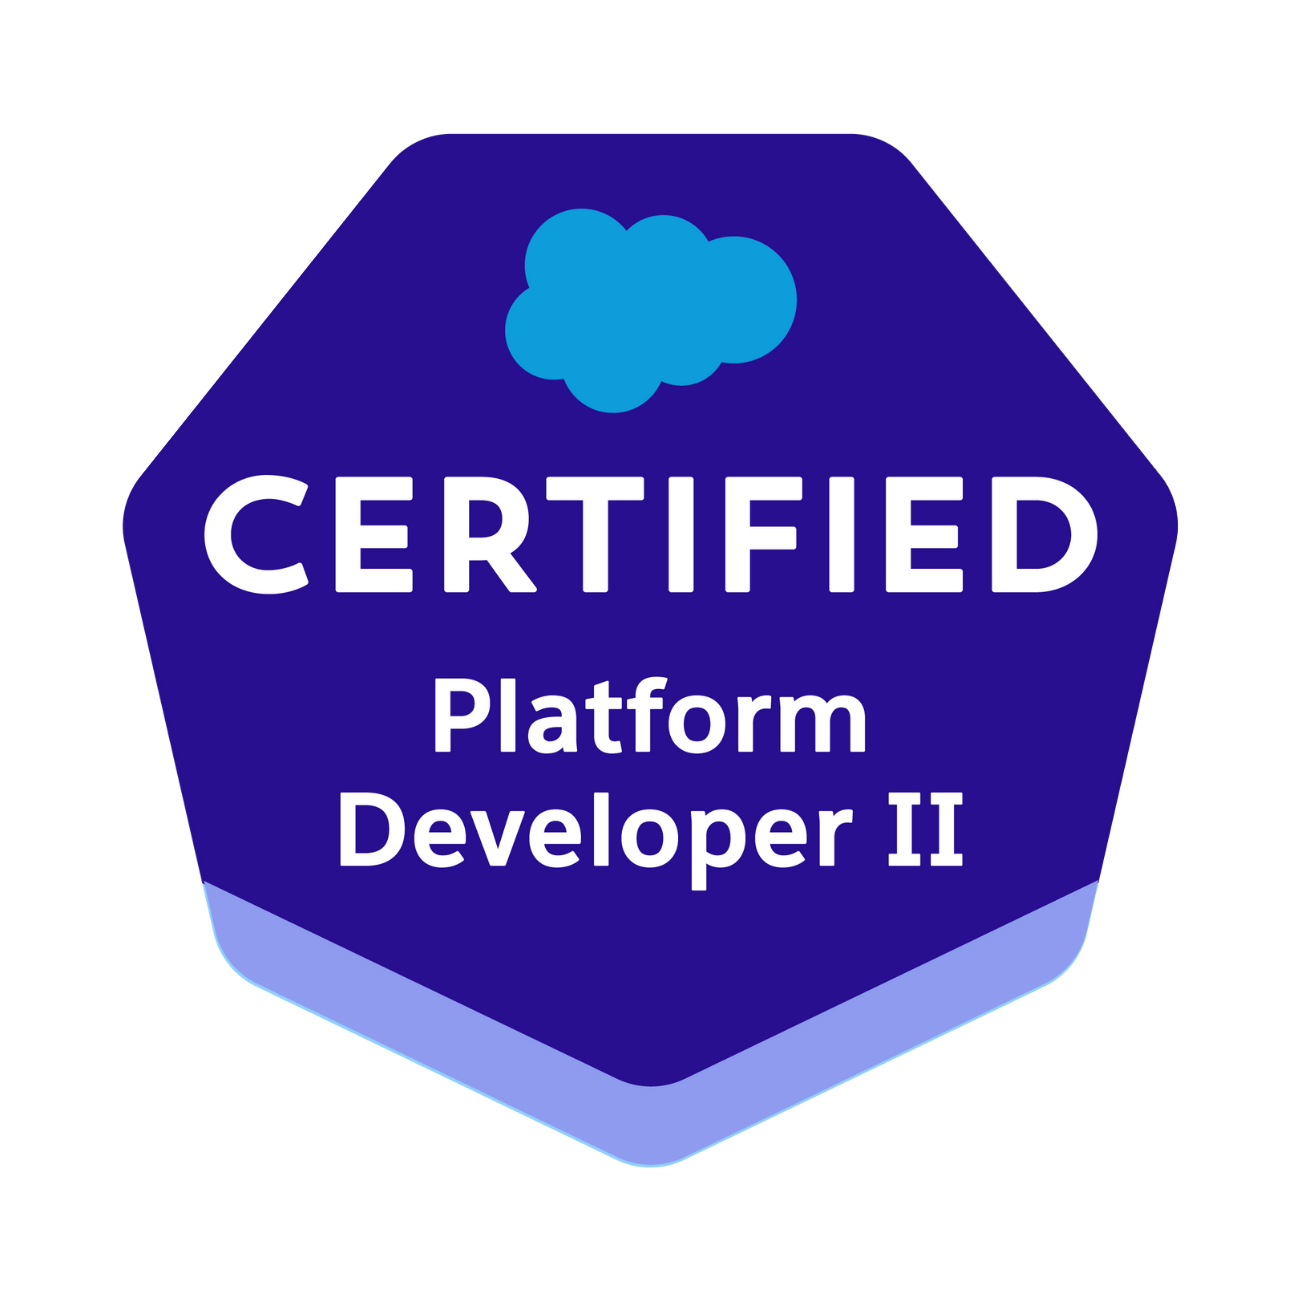 Certified Platform Developer II badge